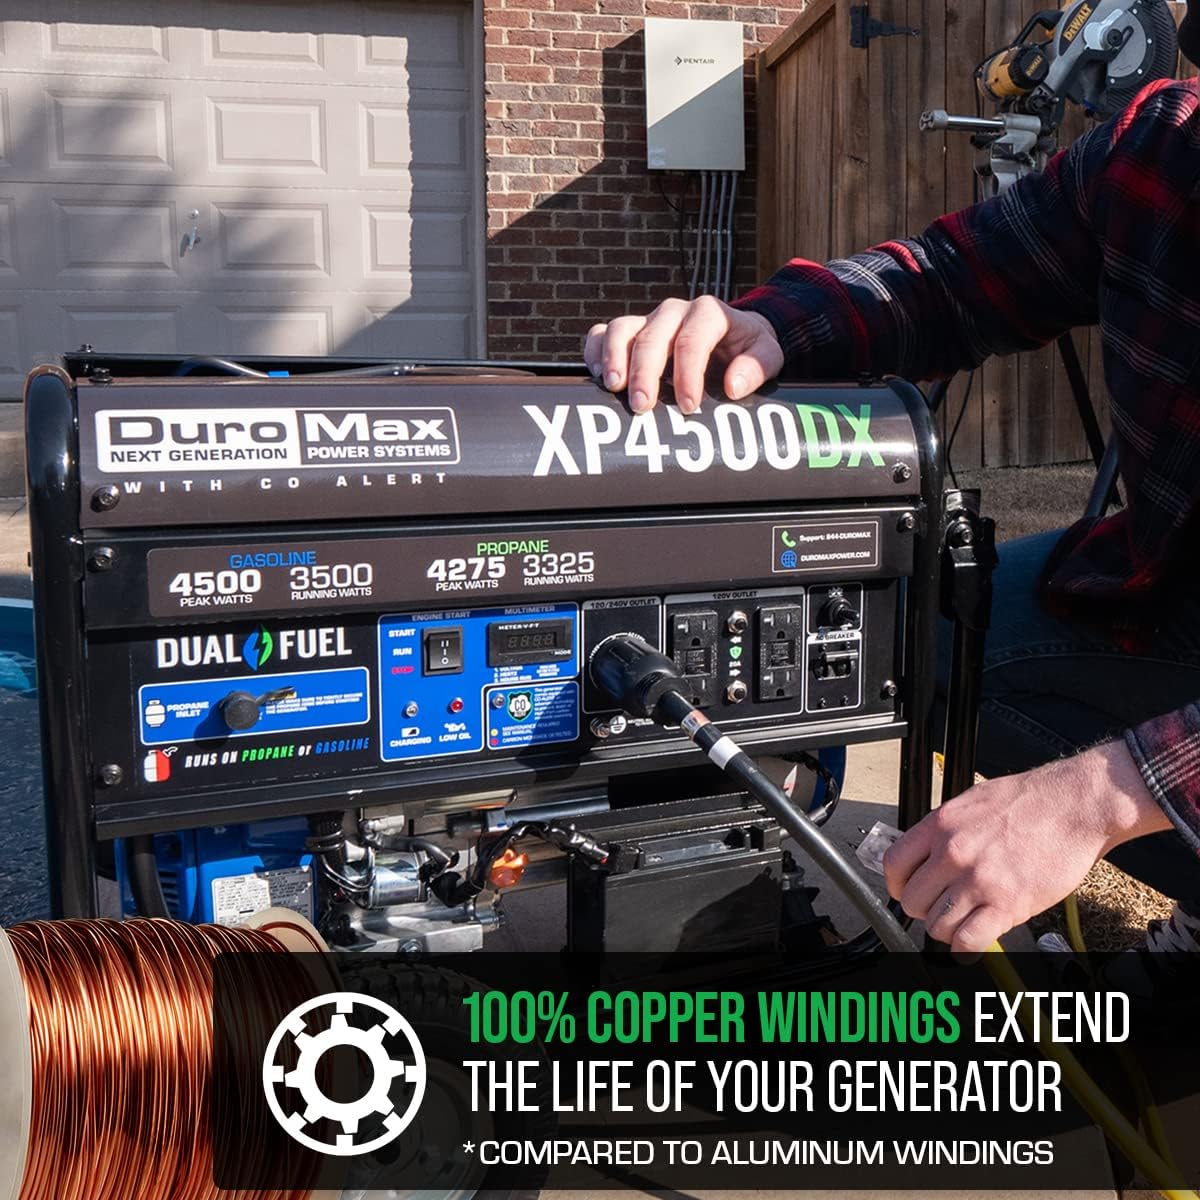 DuroMax XP5500DX 5,500-Watt/4,500-Watt 224cc Electric Start Dual Fuel Portable Generator w/CO Alert - DuroMax XP5500DX Portable Generator Review